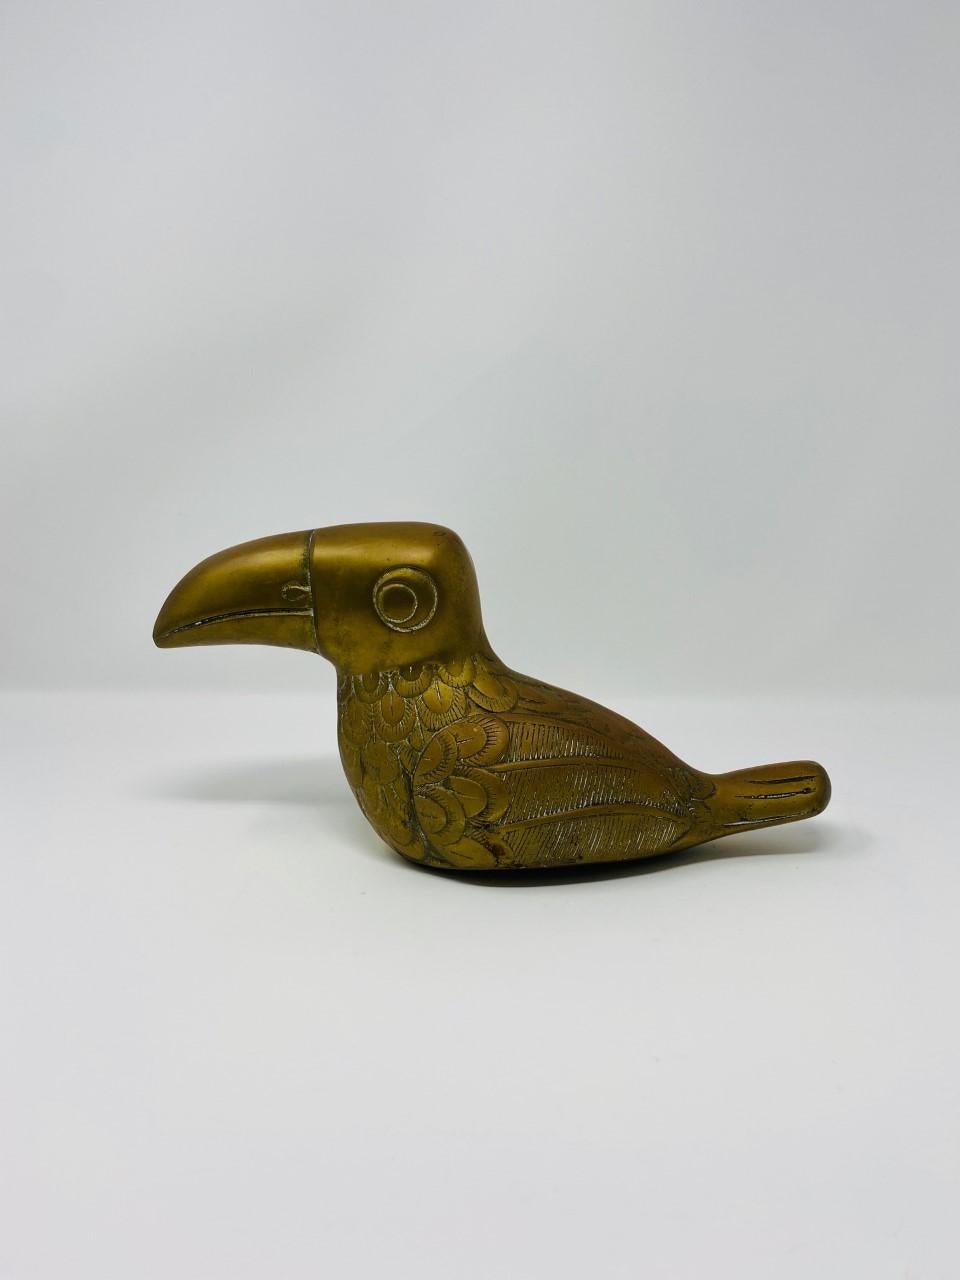 Cast Brass Toucan Sculpture by Dolbi Cashier